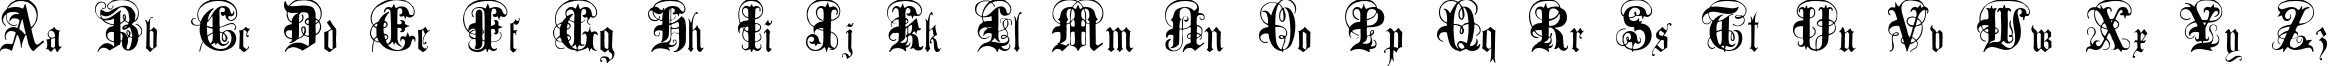 Пример написания английского алфавита шрифтом Anglo Text